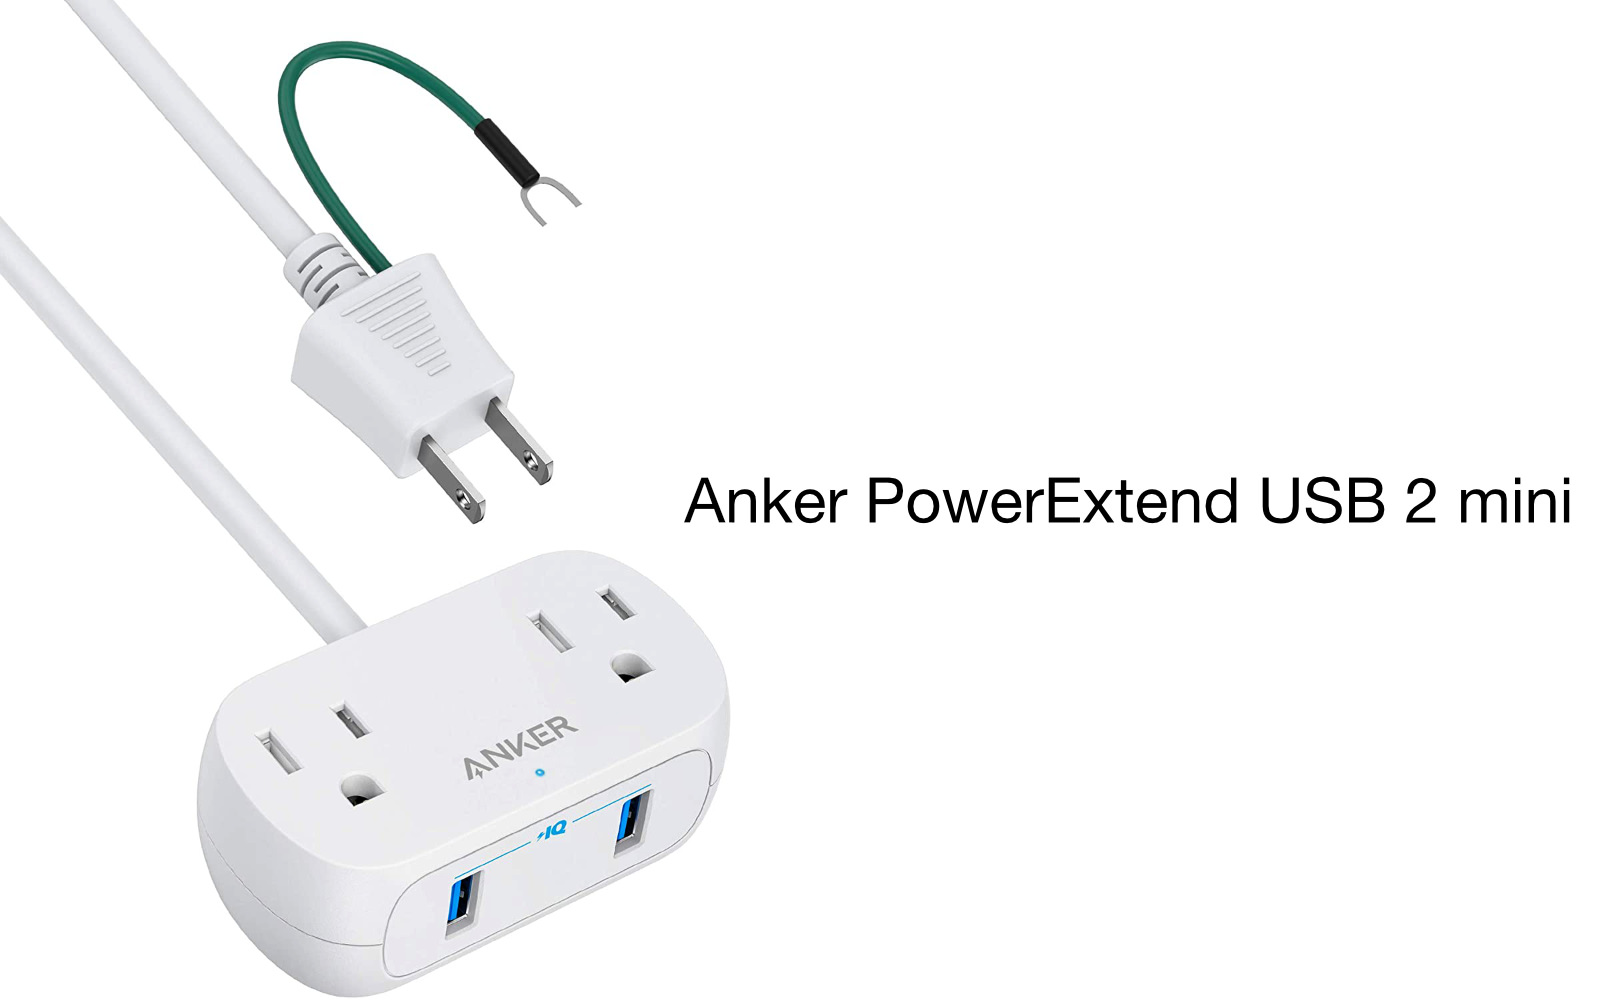 Anker PowerExtend USB 2 mini